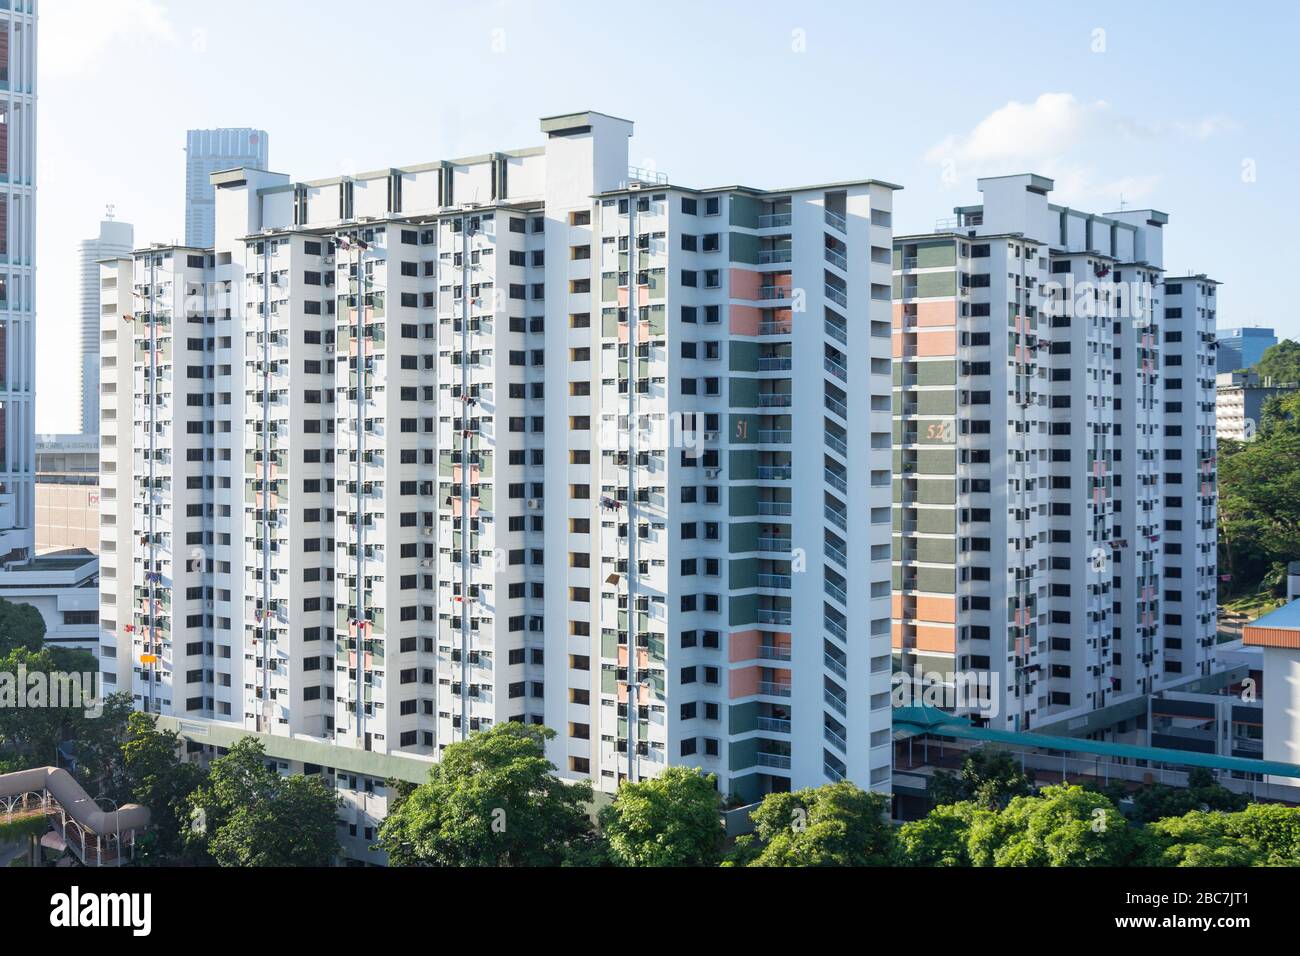 Große Wohnblöcke, Havelock Road, Chinatown, Outram District, Central Area, Singapur Stockfoto